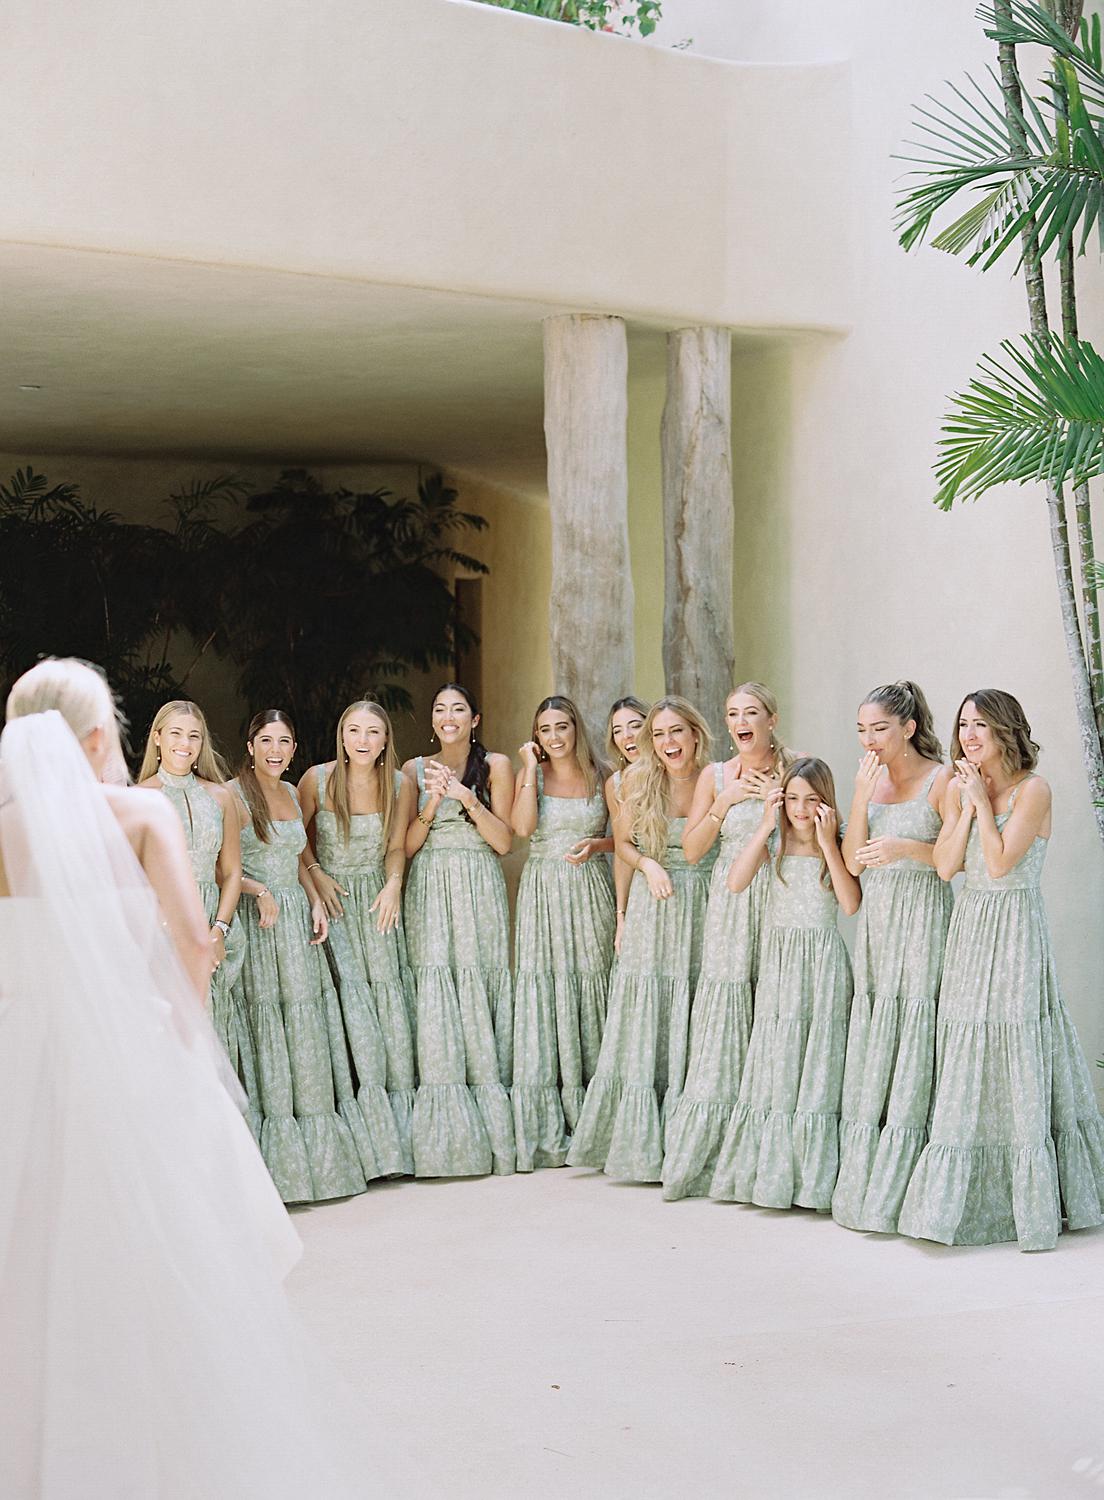 Bride showing bridesmaids her dress for the first time during their Altos de Chavón wedding.